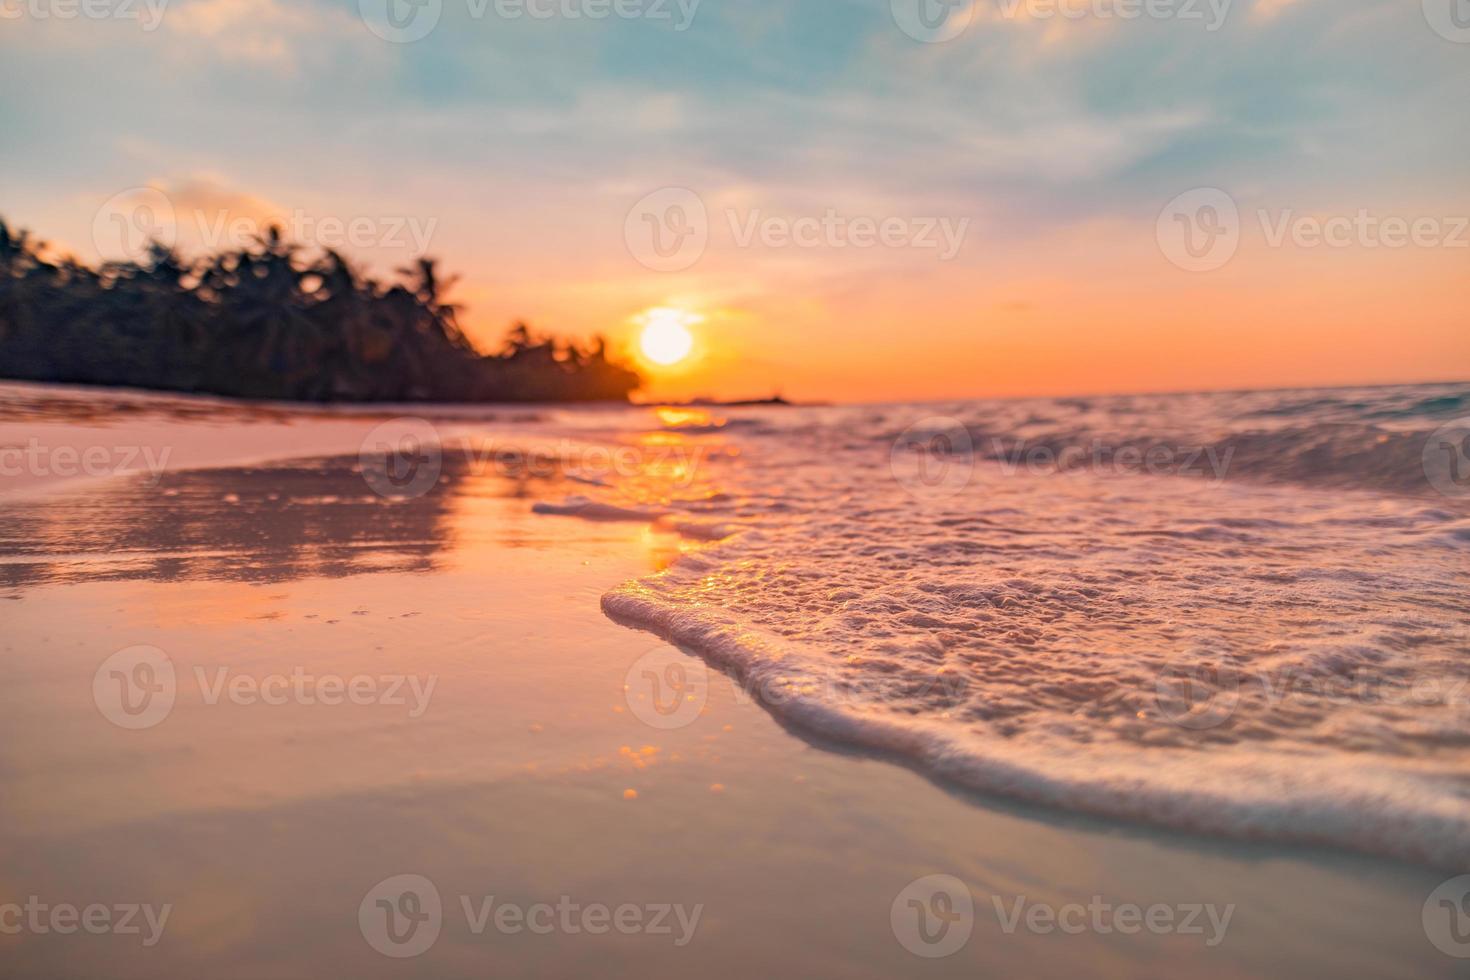 detailopname eiland kust palm bomen zee zand strand. wazig mooi tropisch strand landschap. inspireren zeegezicht horizon golven spatten. kleurrijk zonsondergang lucht rustig kom tot rust zomer kust, droom natuur foto